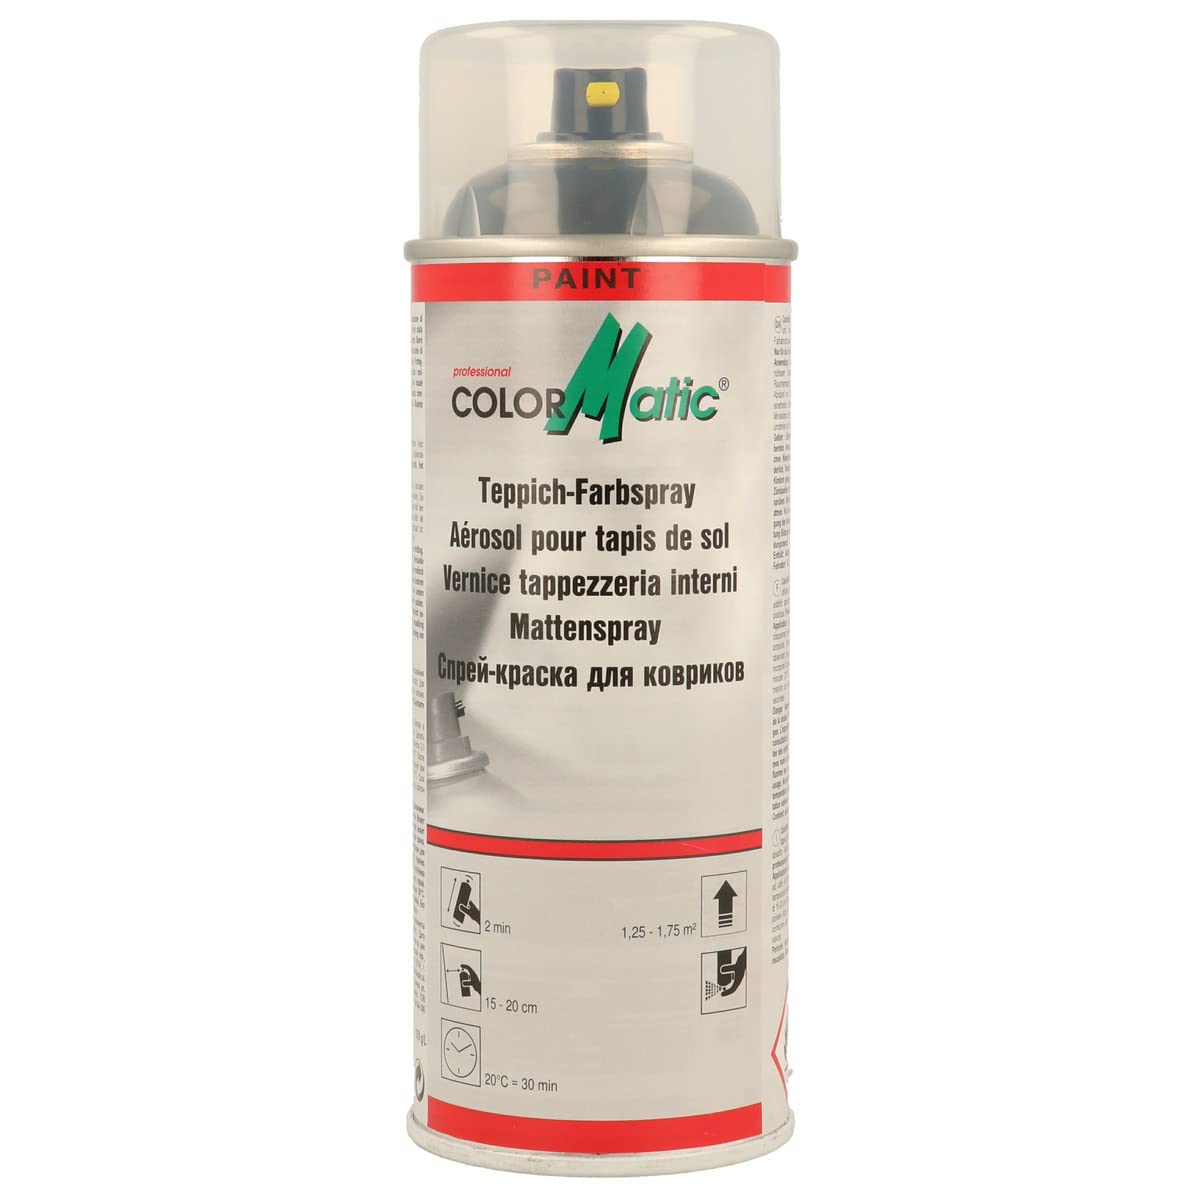 ColorMatic 369063 Teppich-Farbspray anthrazit 400 ml von COLORMATIC